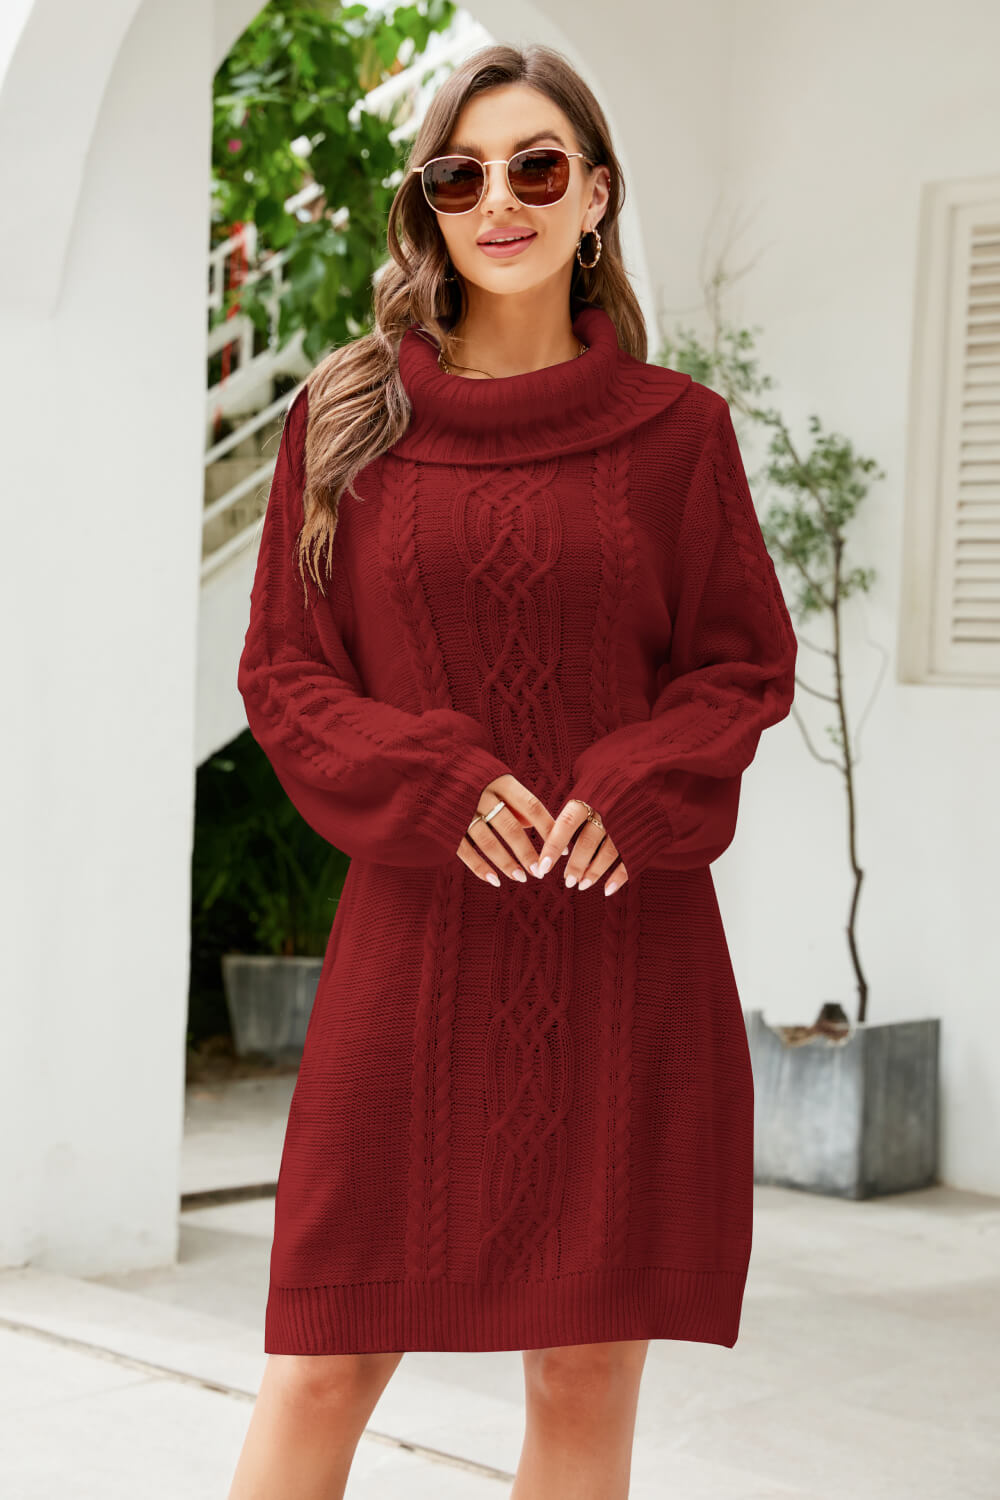 Woven Right Mixed Knit Turtleneck Lantern Sleeve Sweater Dress - TiffanyzKlozet